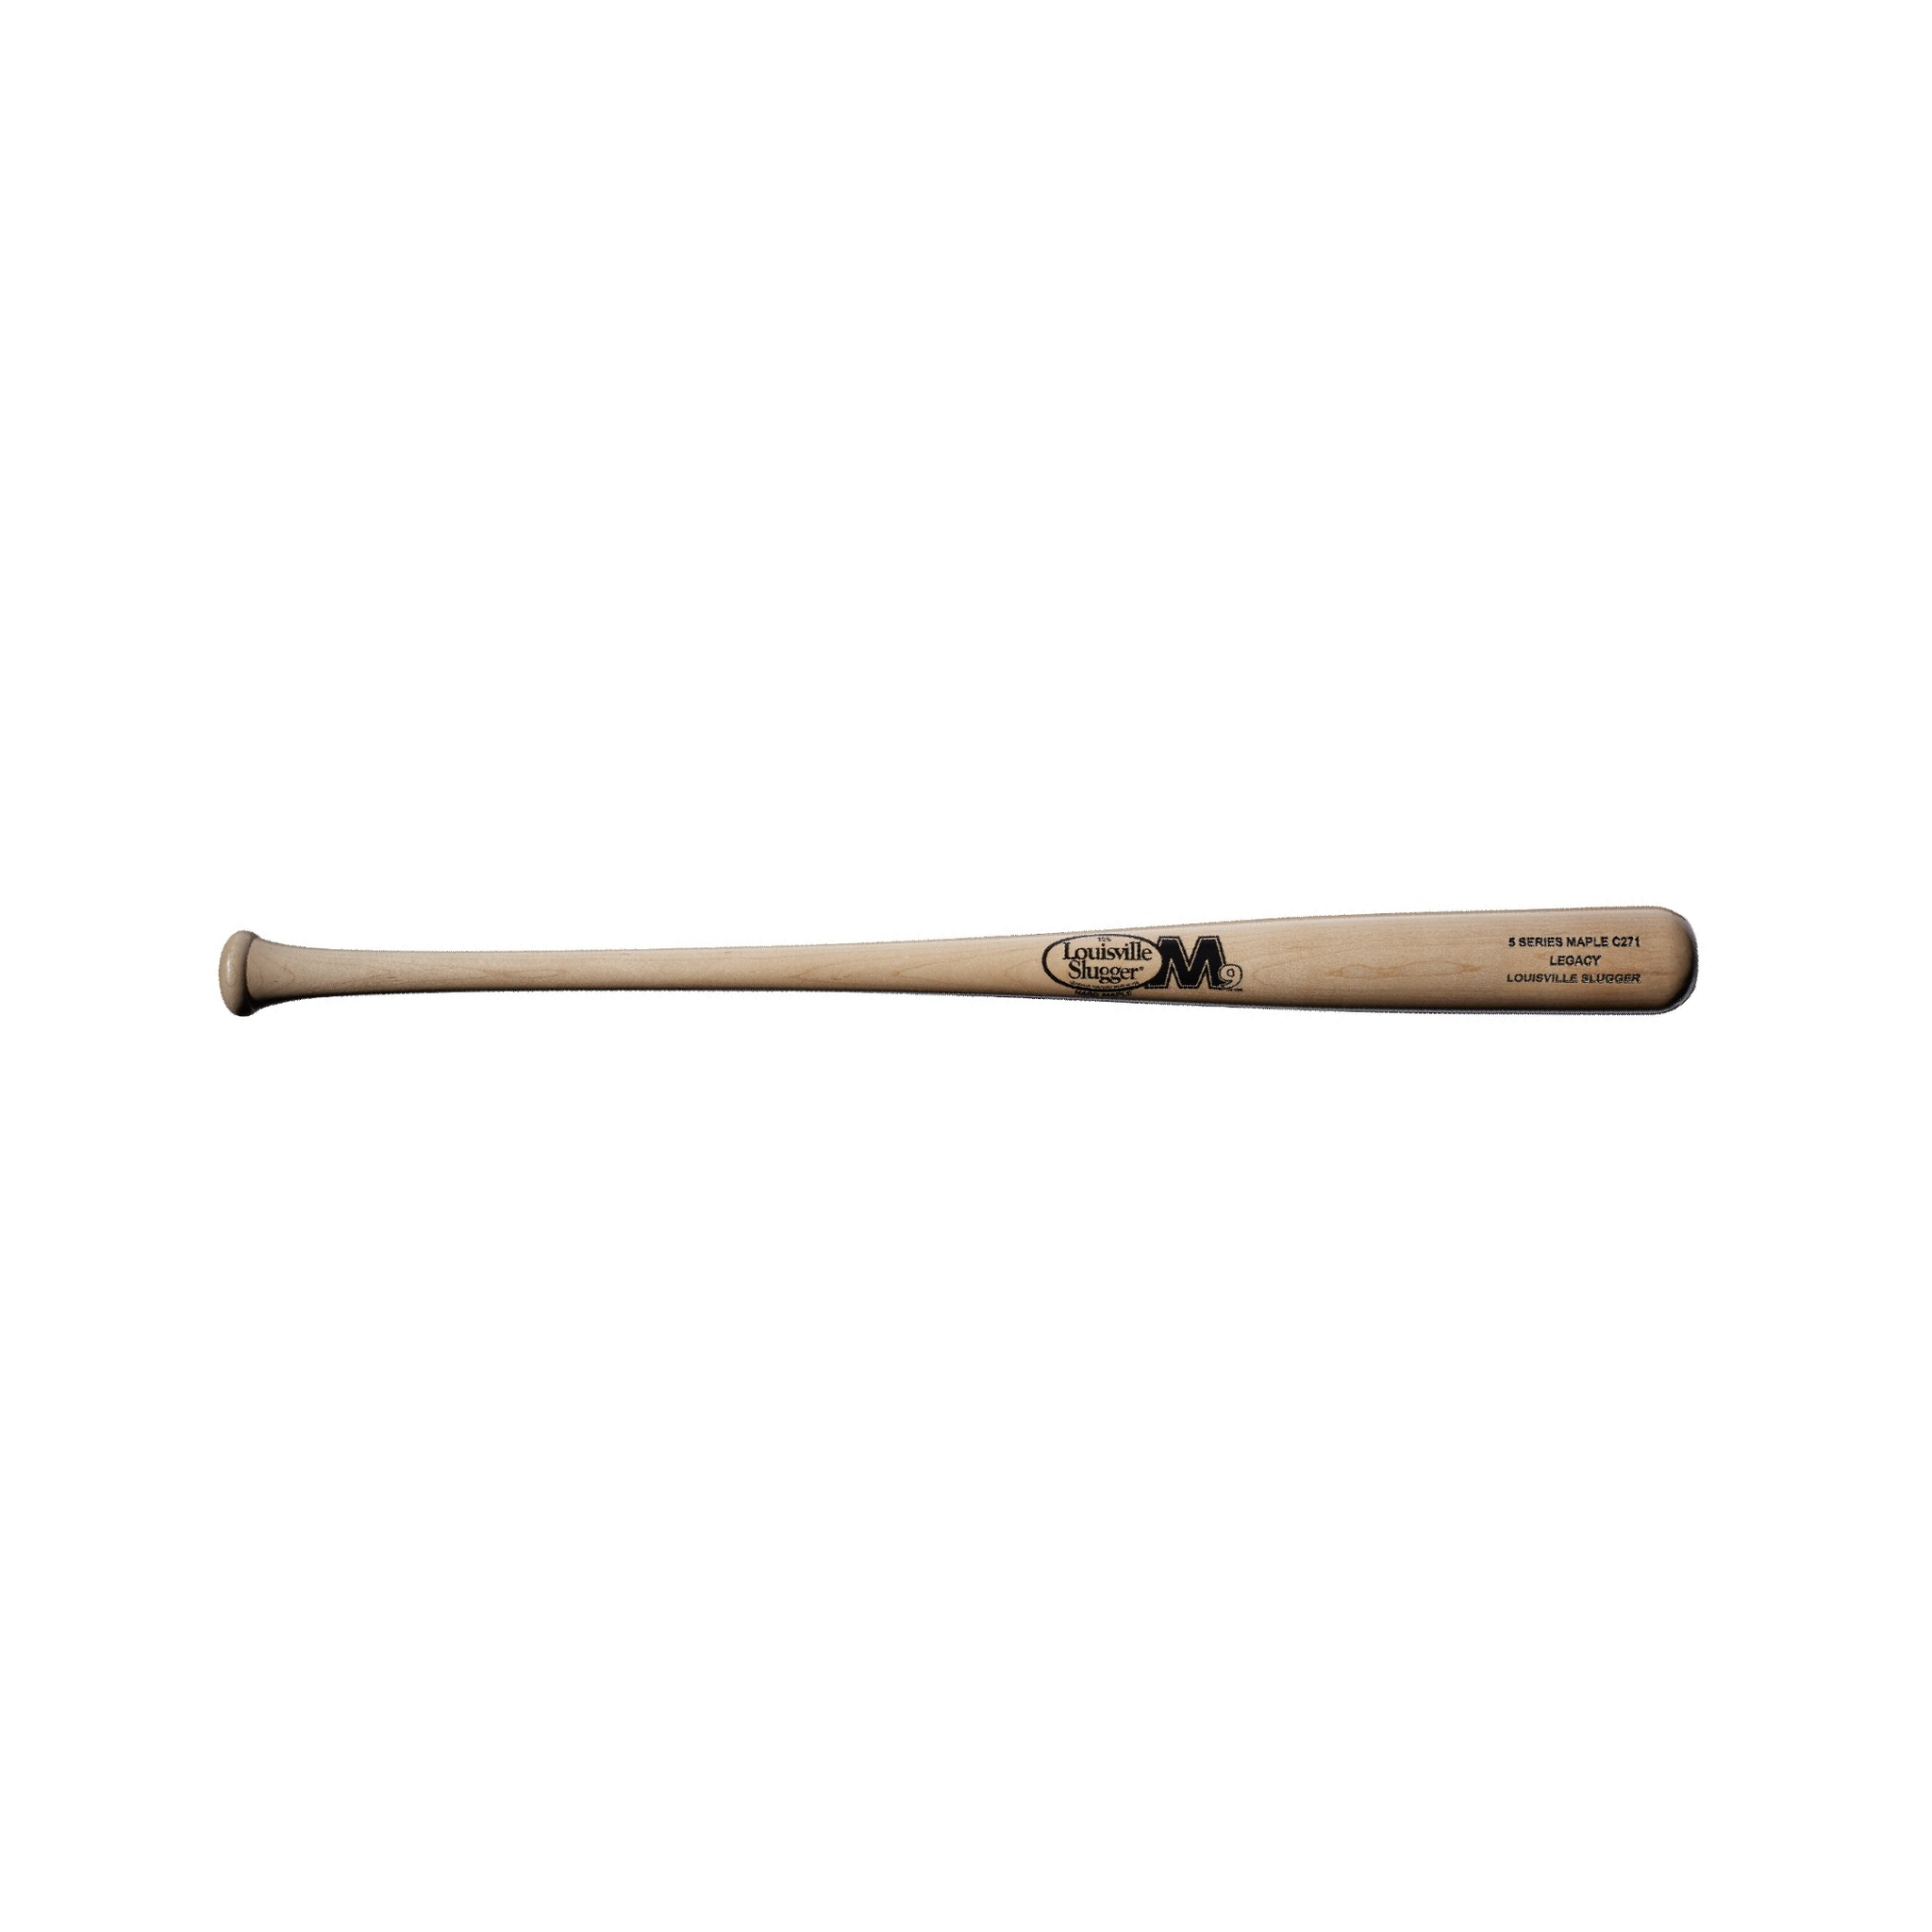 Louisville Slugger Legacy Maple M9 C271 Bat